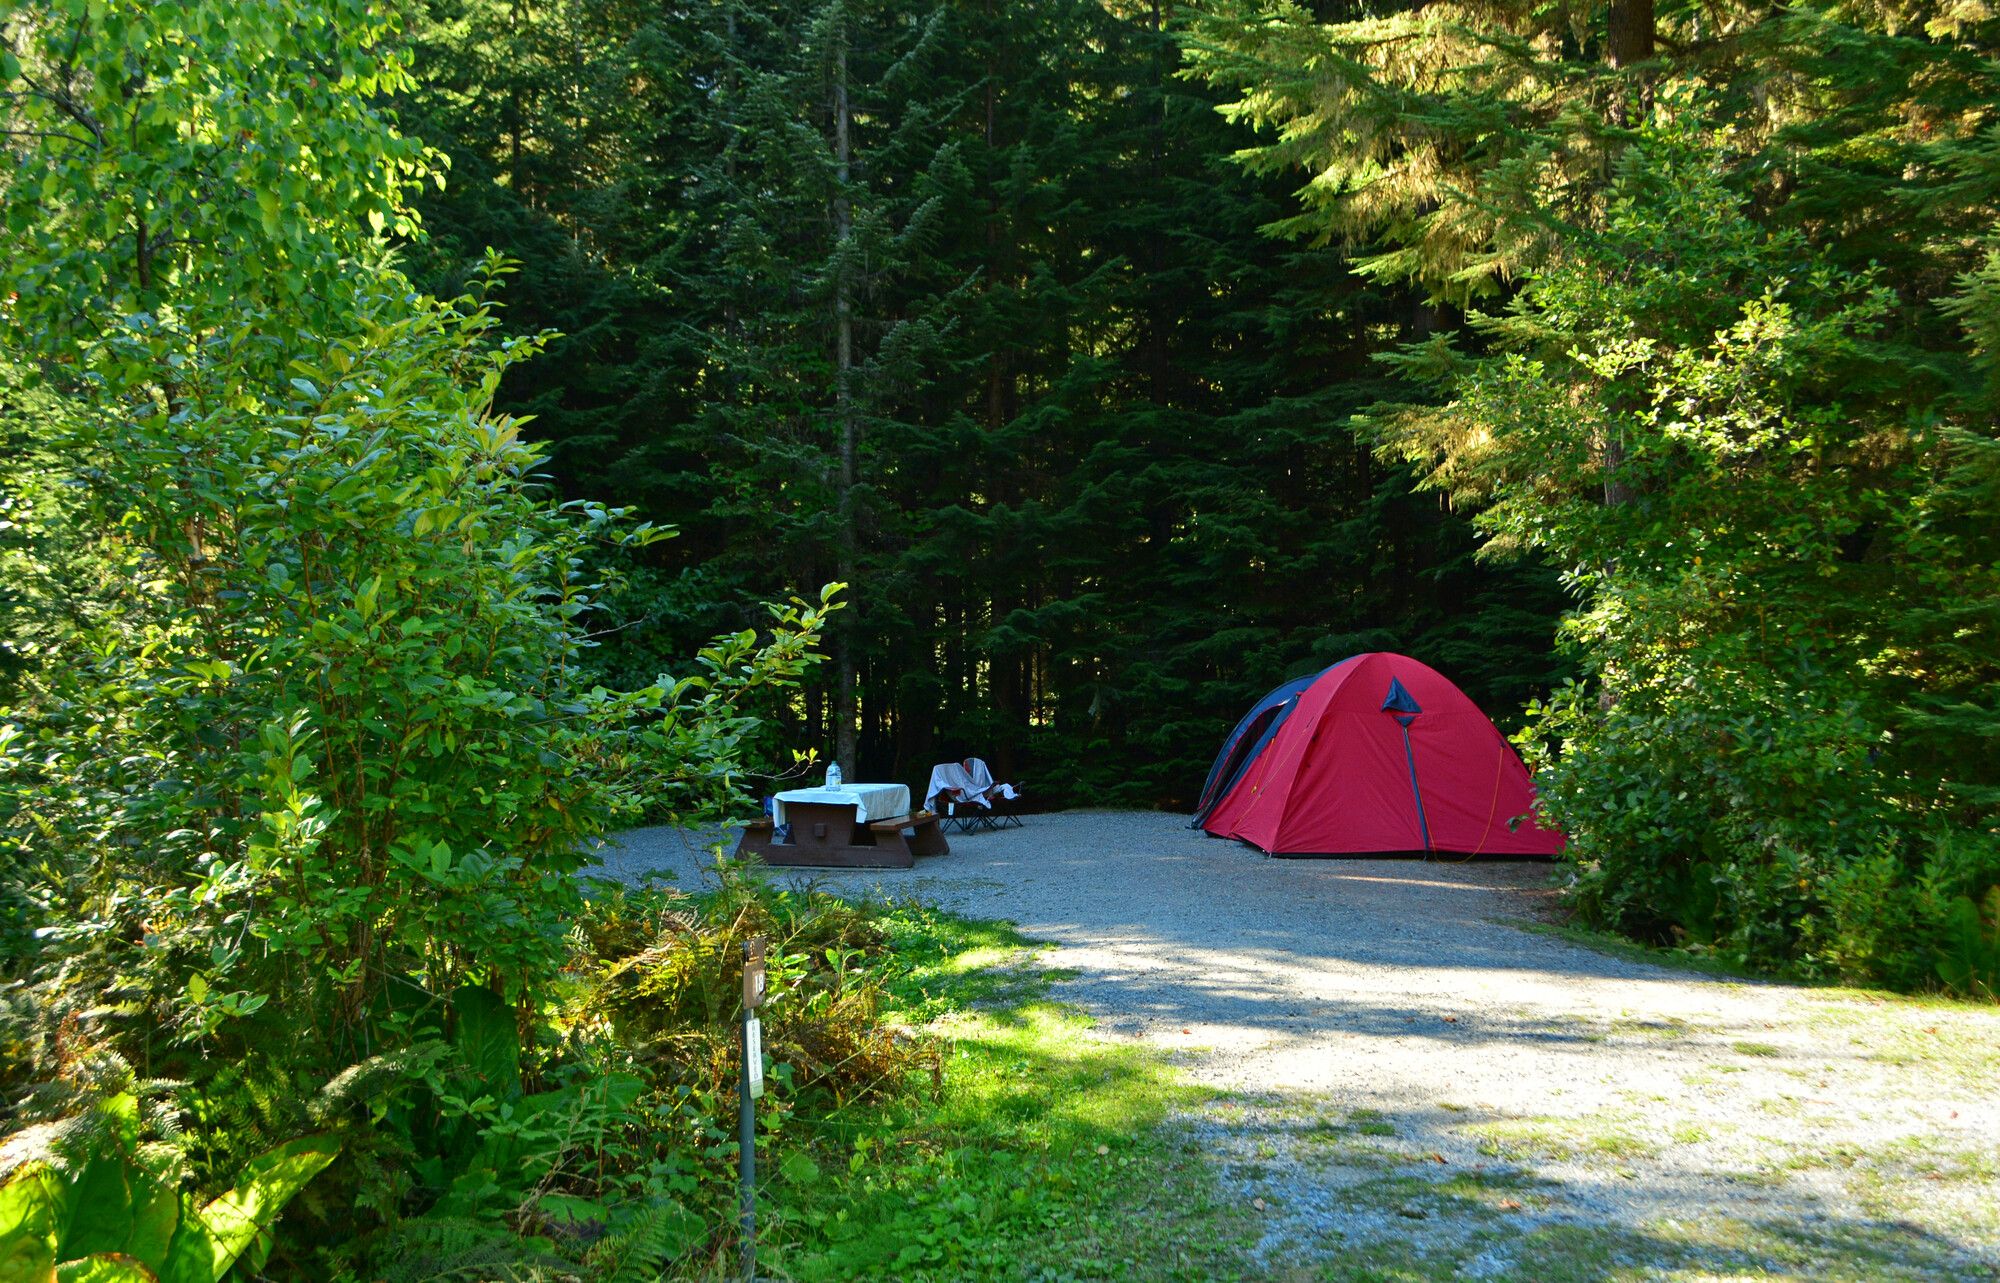 A campsite in Birkenhead Lake Park.